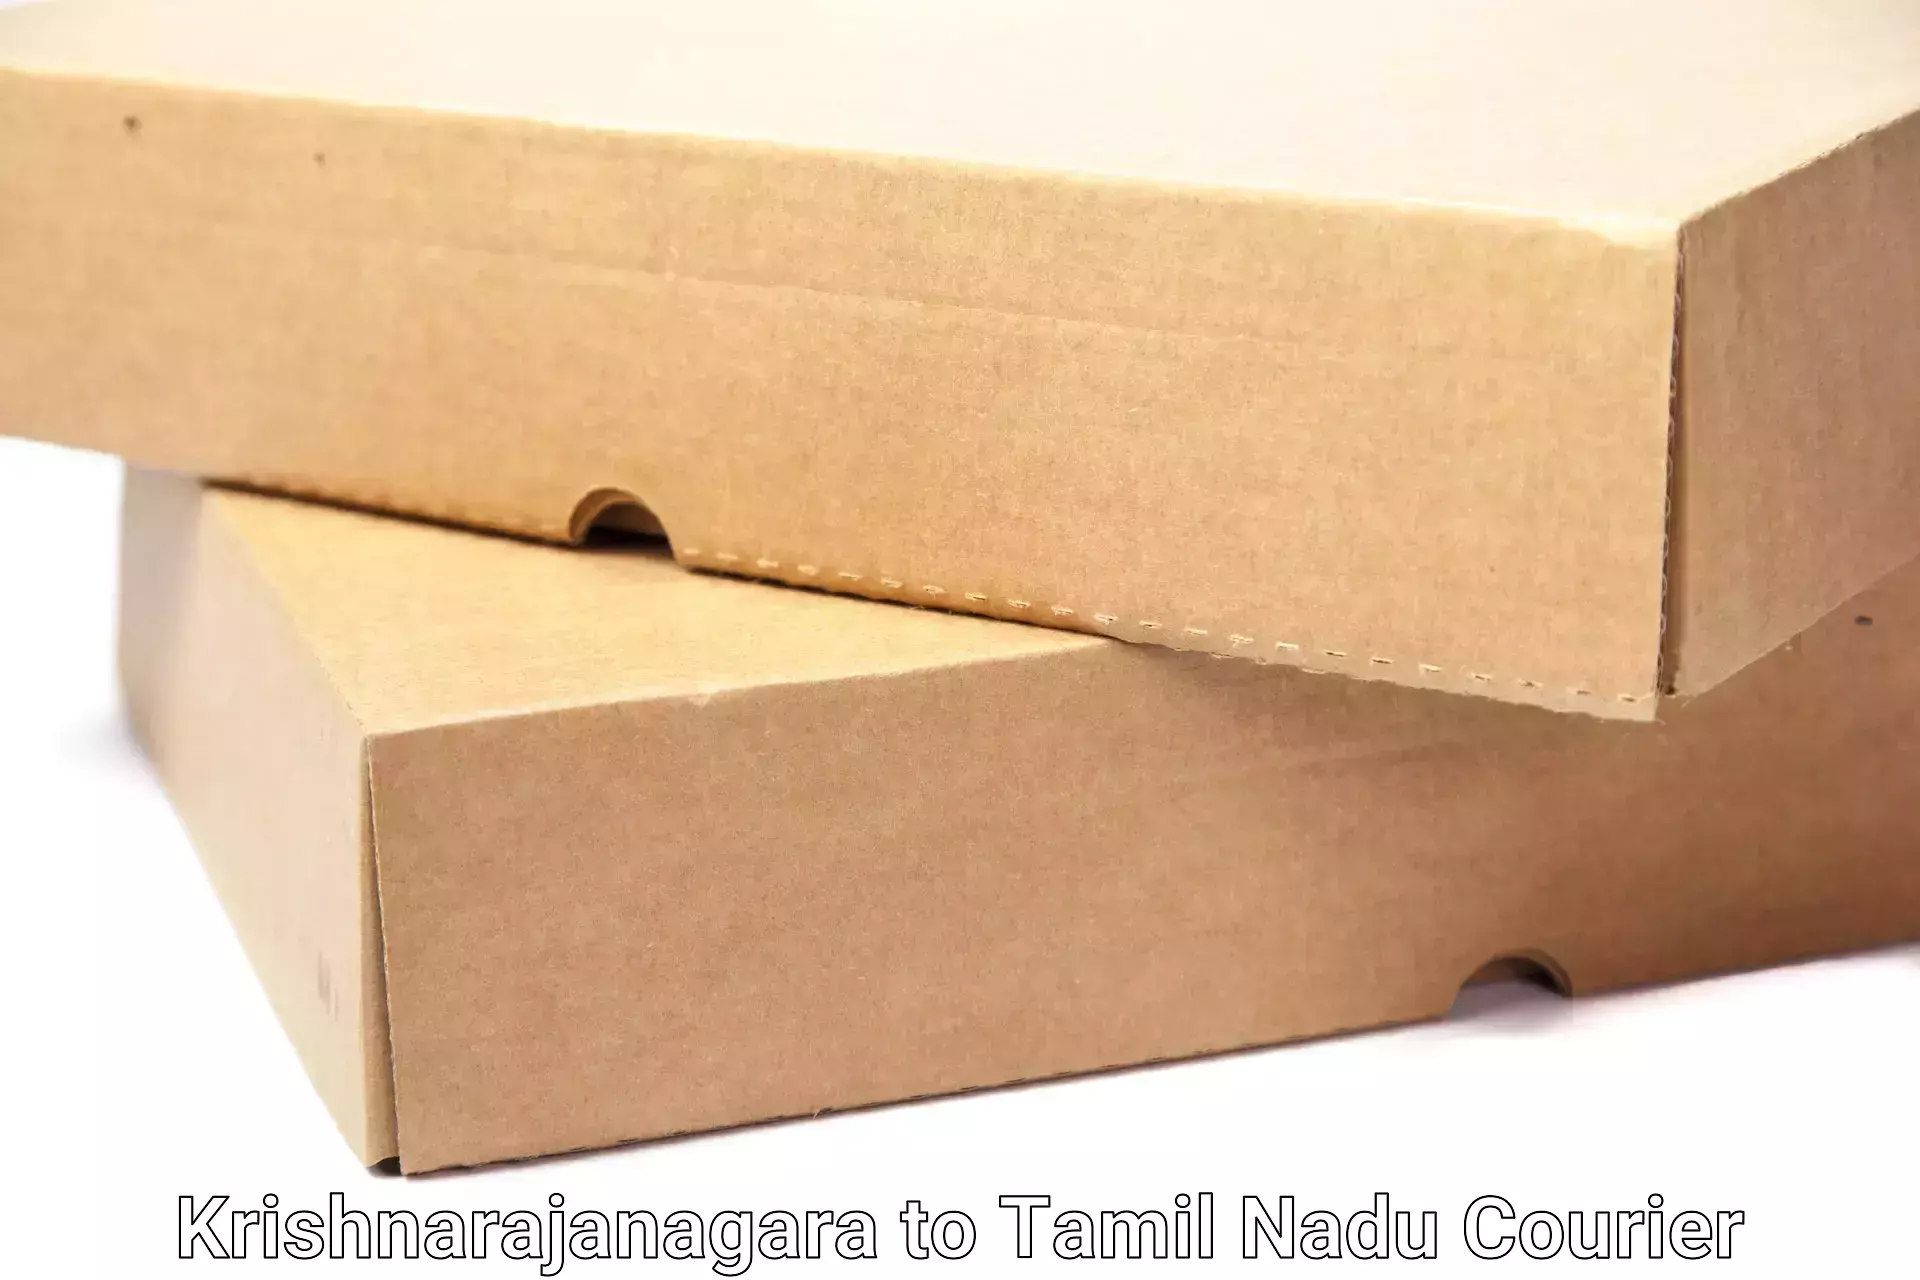 Moving and packing experts Krishnarajanagara to Madurai